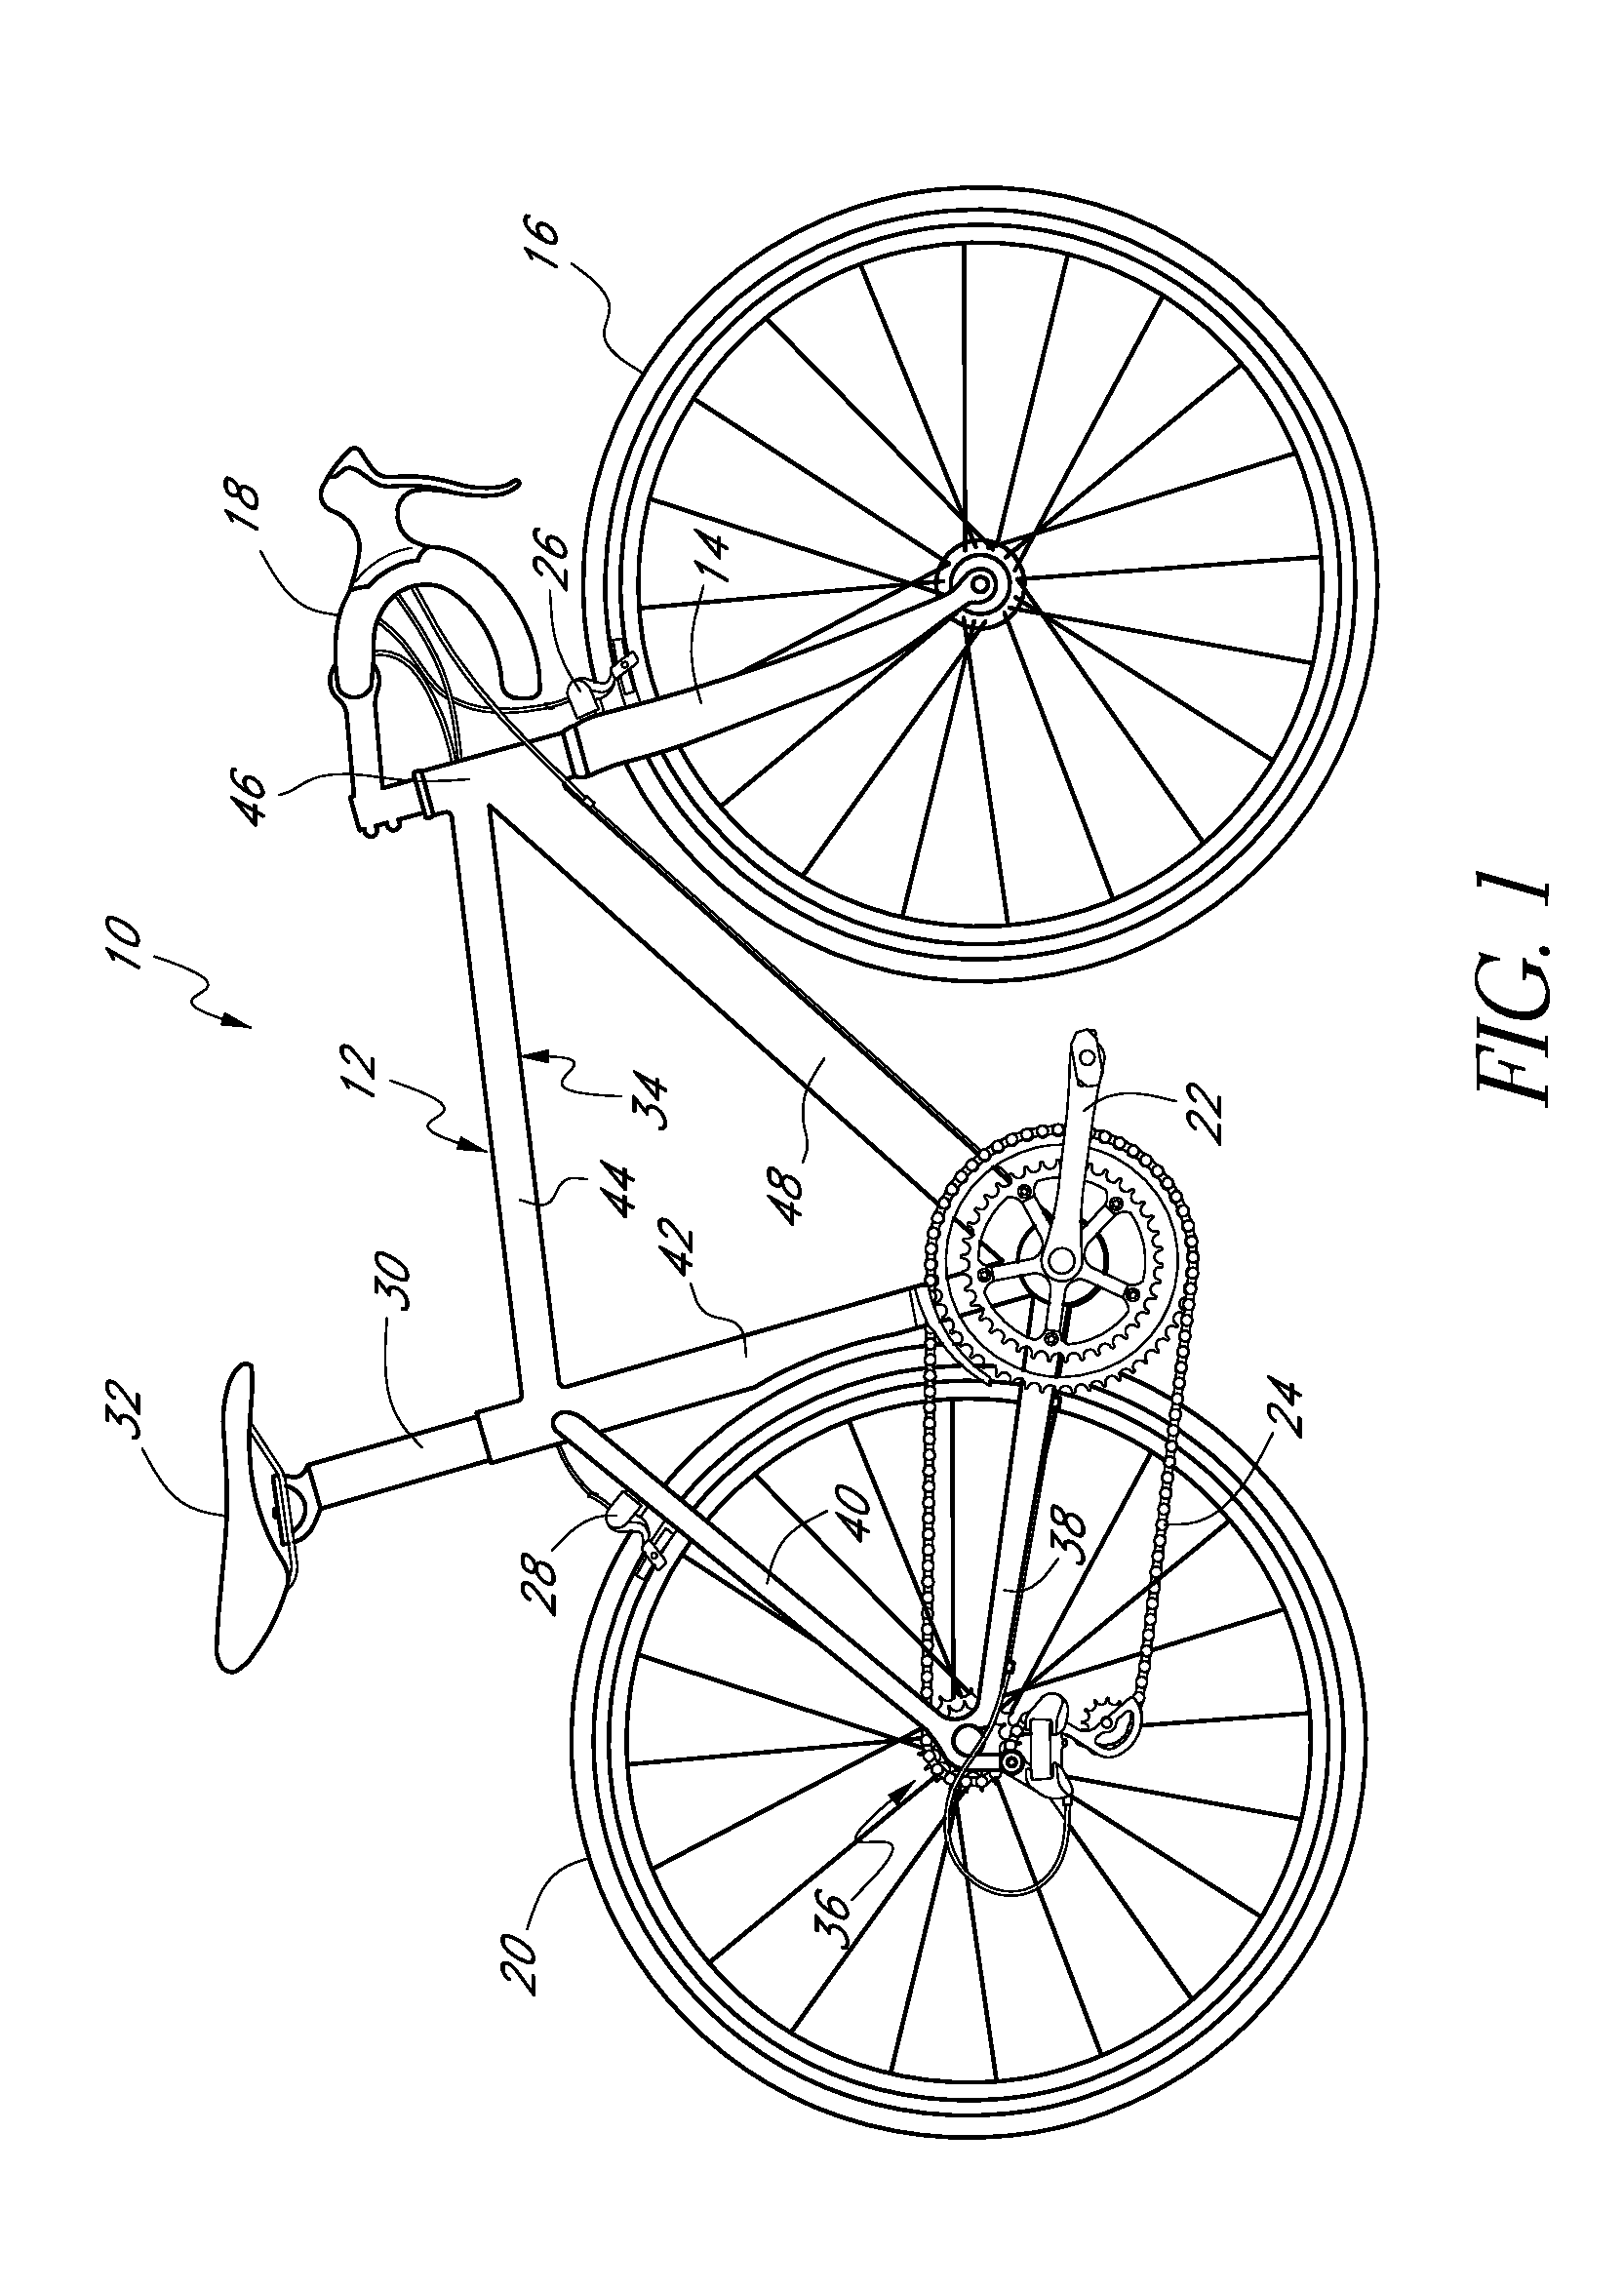 Bicycle seat tube